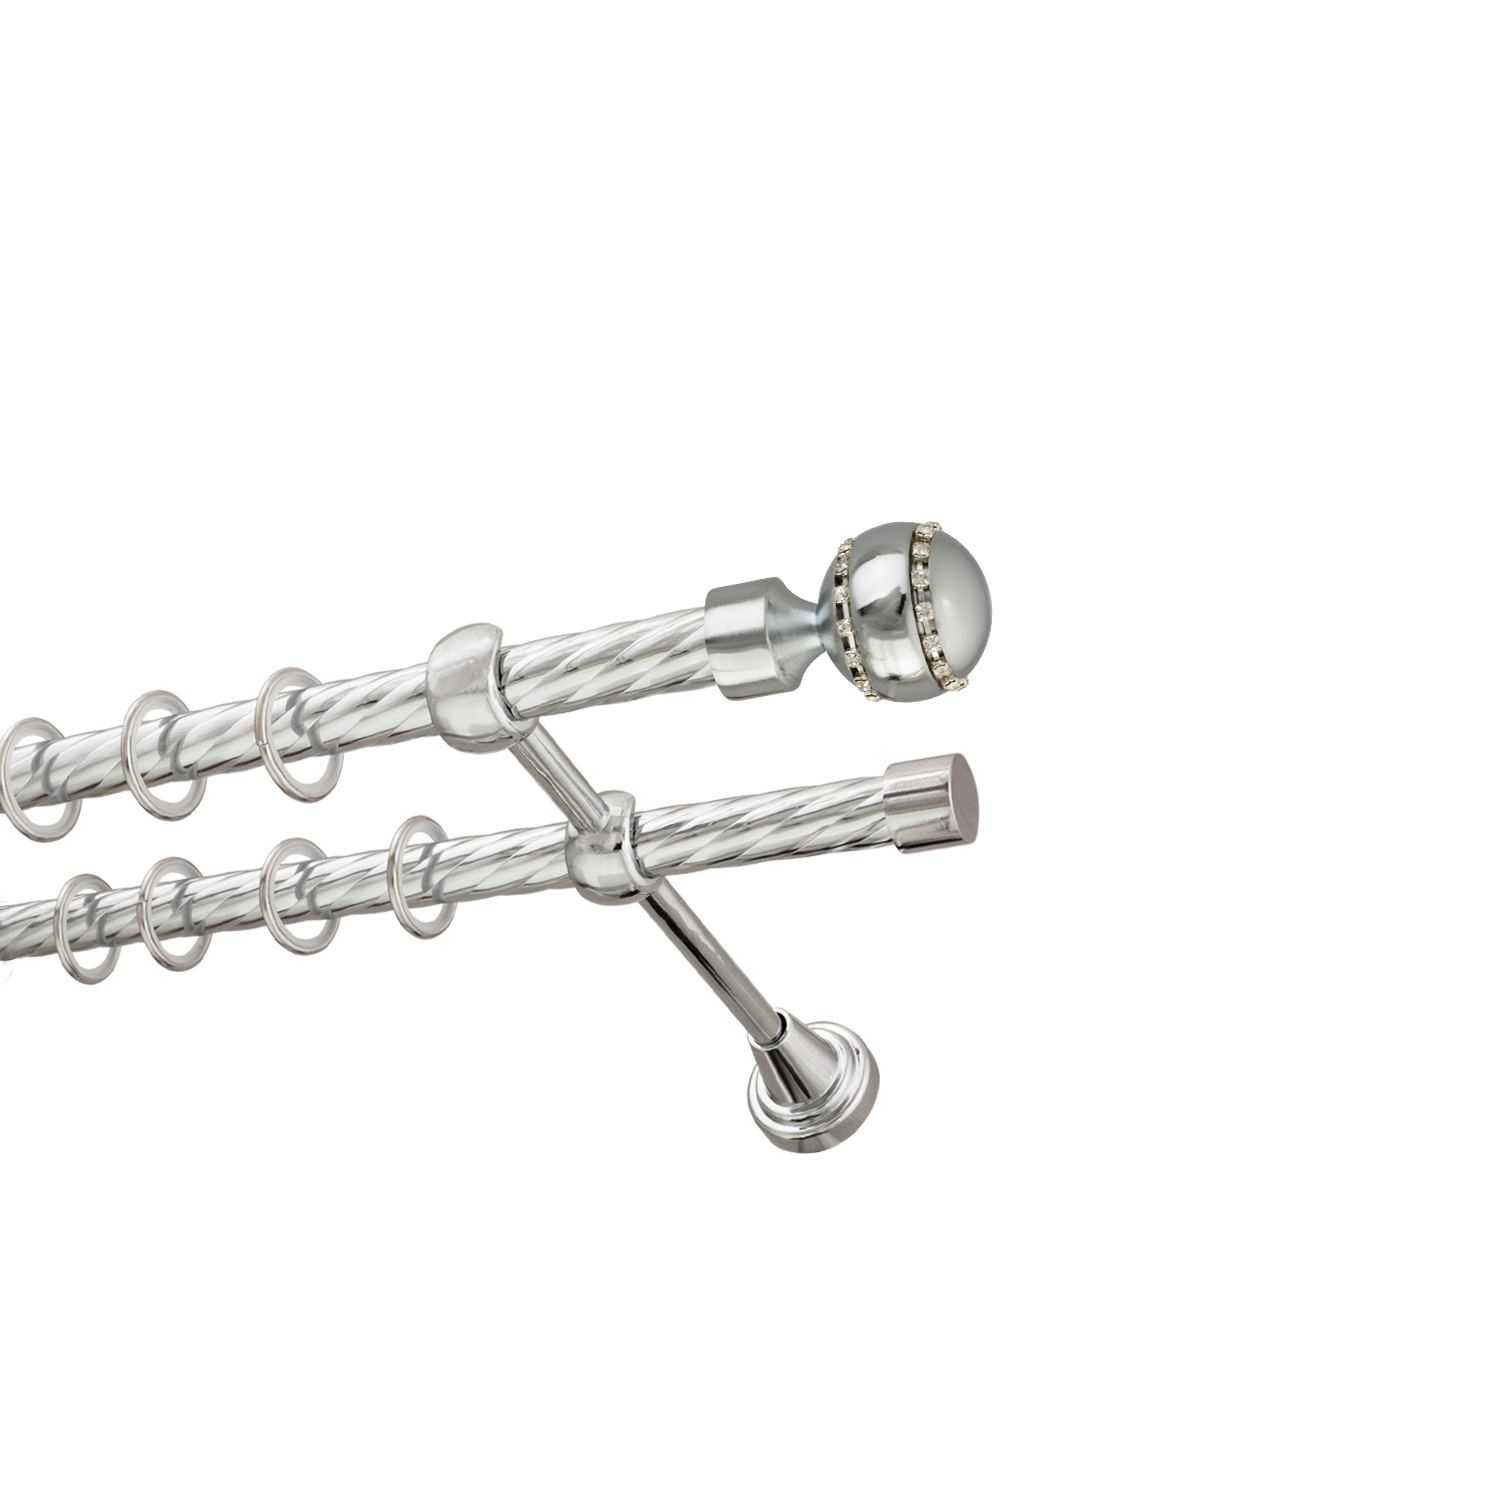 Металлический карниз для штор Модерн, двухрядный 16/16 мм, серебро, витая штанга, длина 200 см - фото Wikidecor.ru